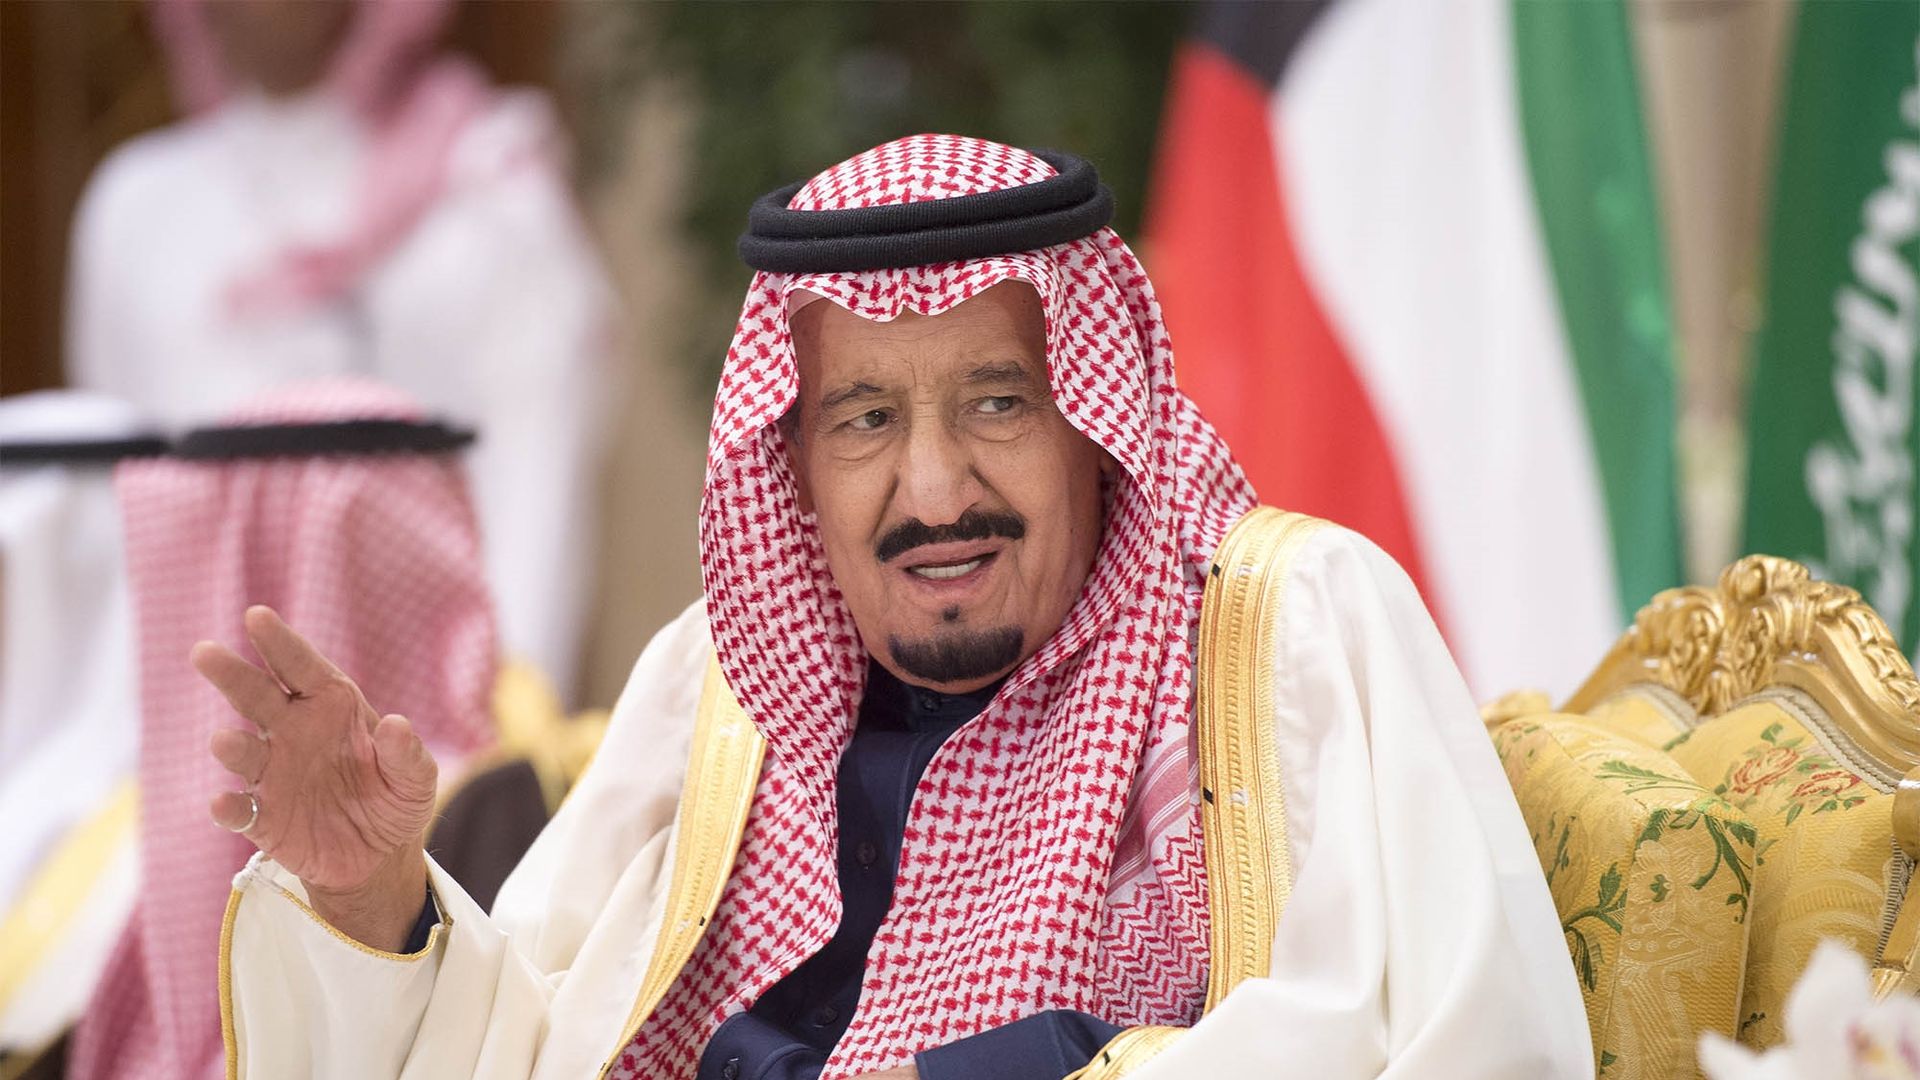 Saudi King Salman speaks with fingers up